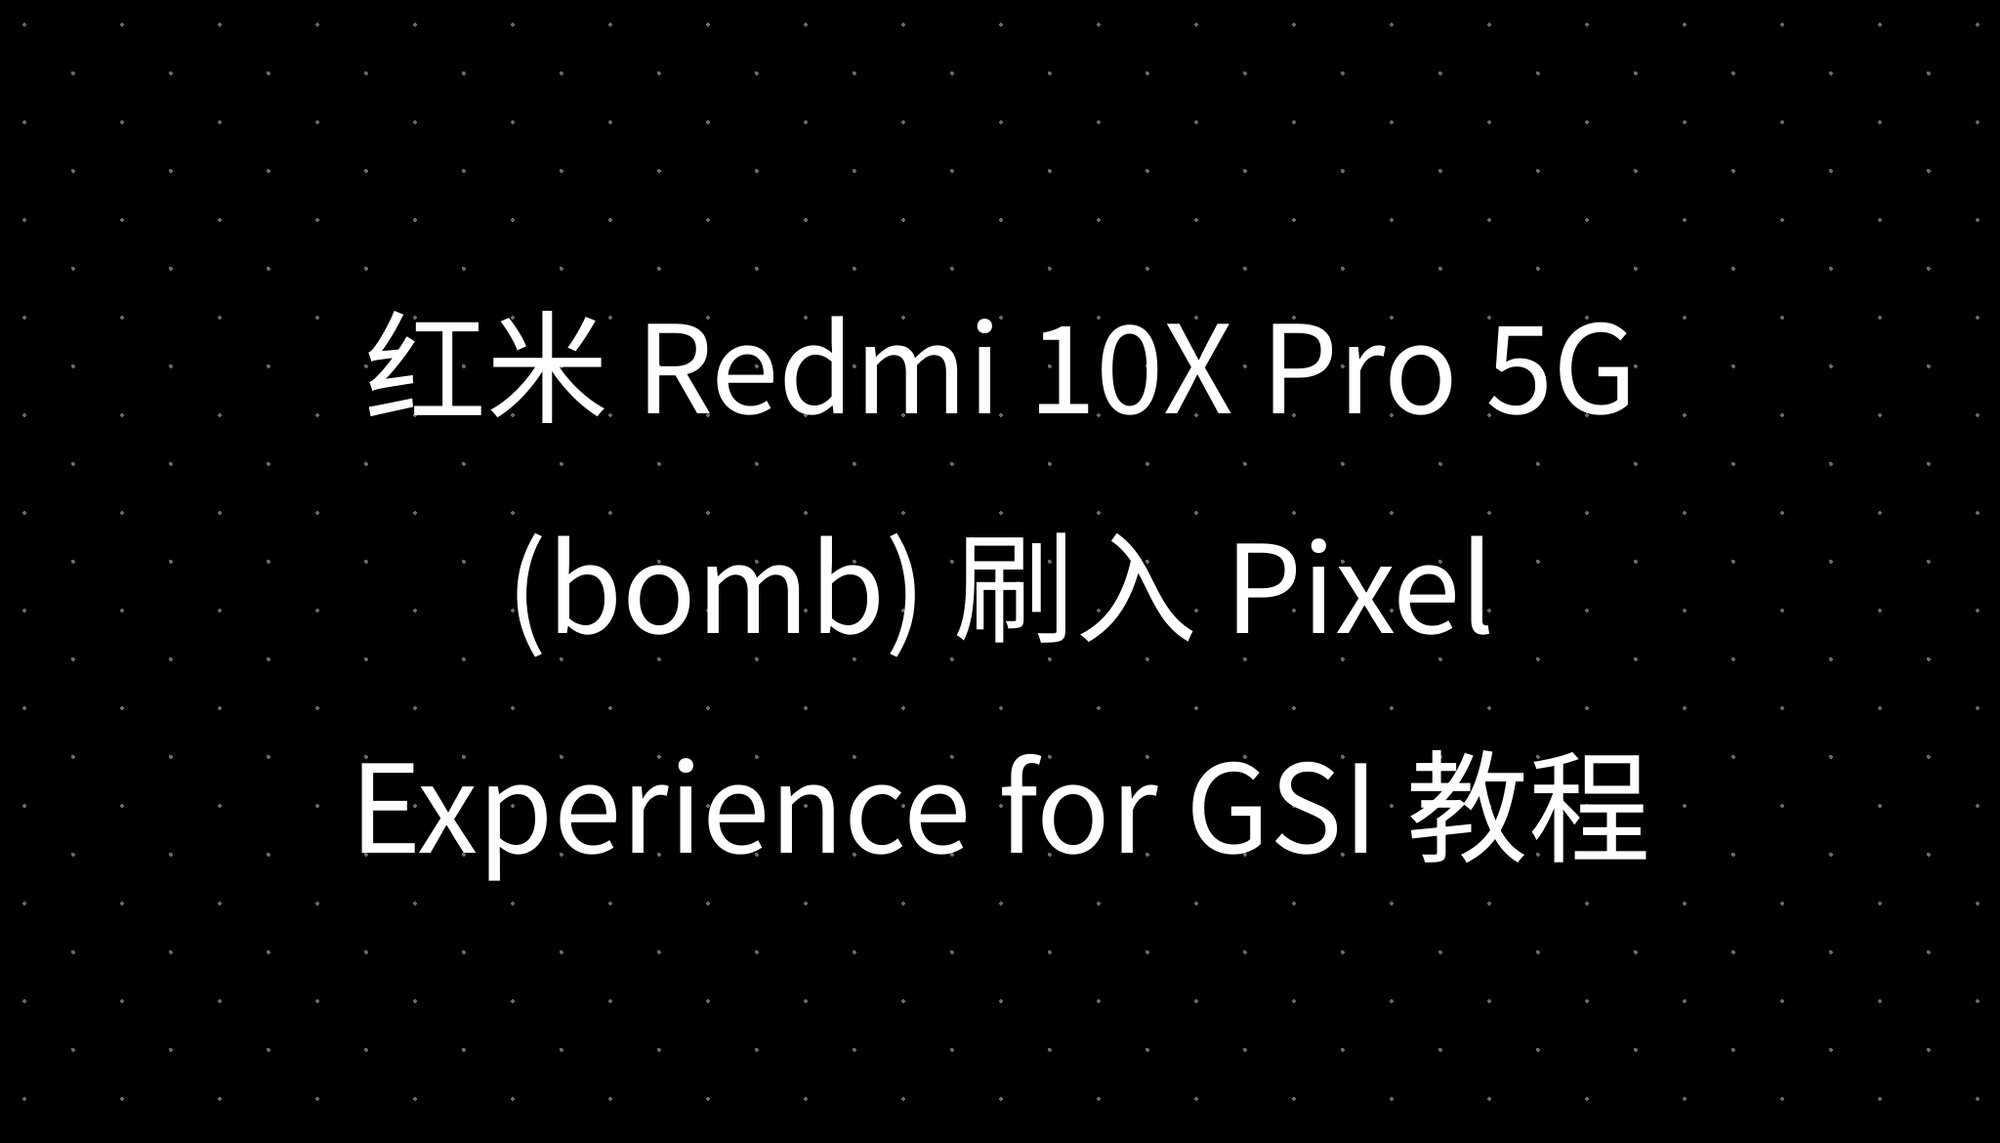 红米 Redmi 10X Pro 5G (bomb) 刷入 Pixel Experience for GSI 教程